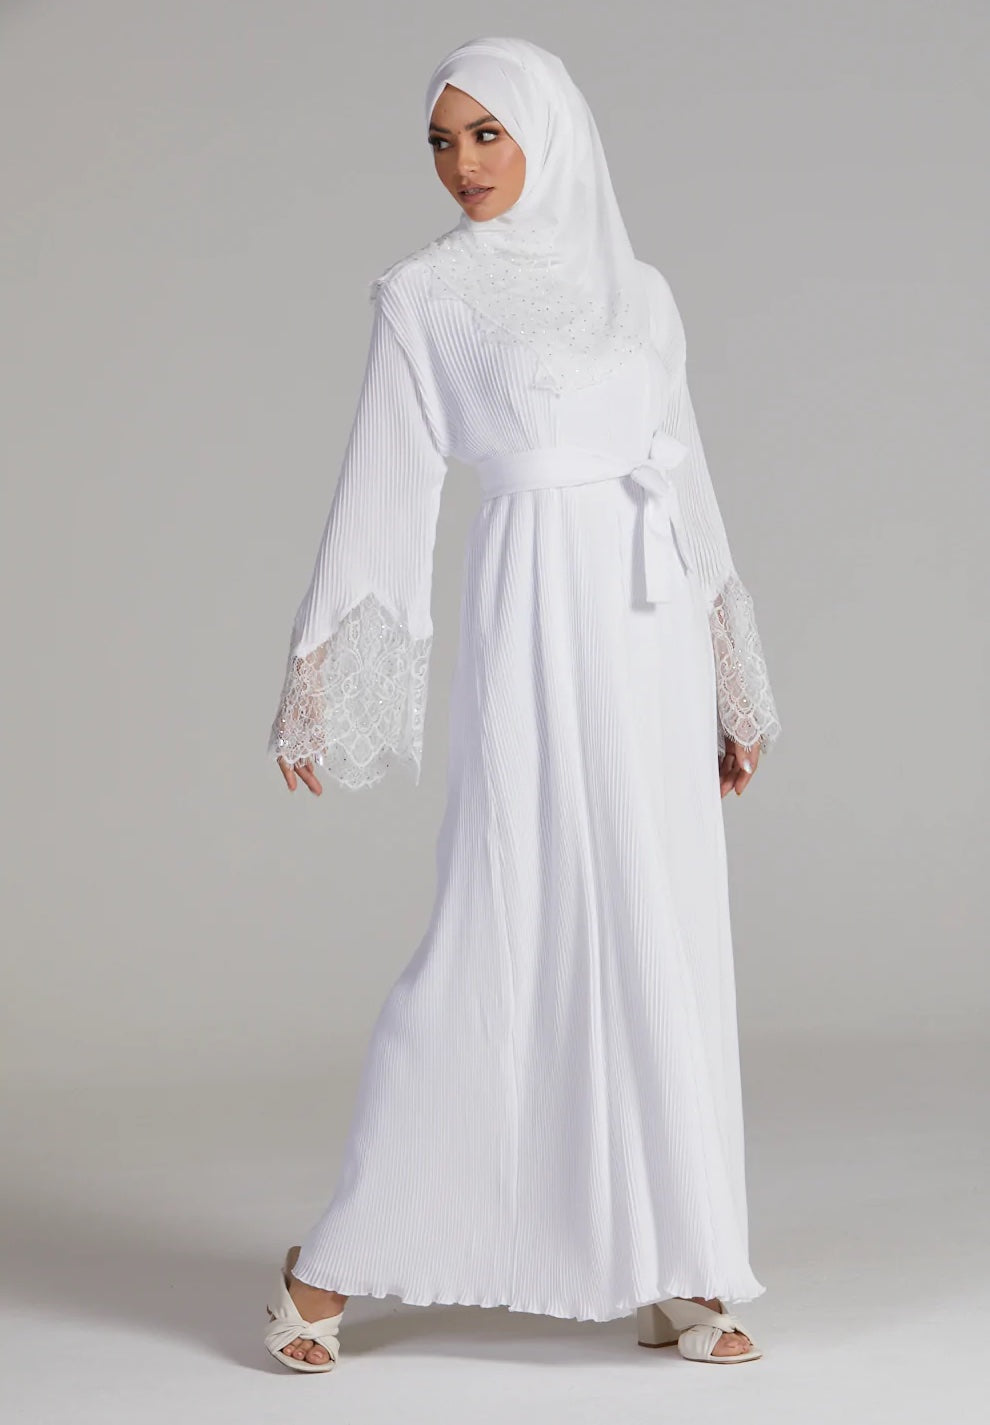 The secret to elevating a modest wardrobe basic like this white